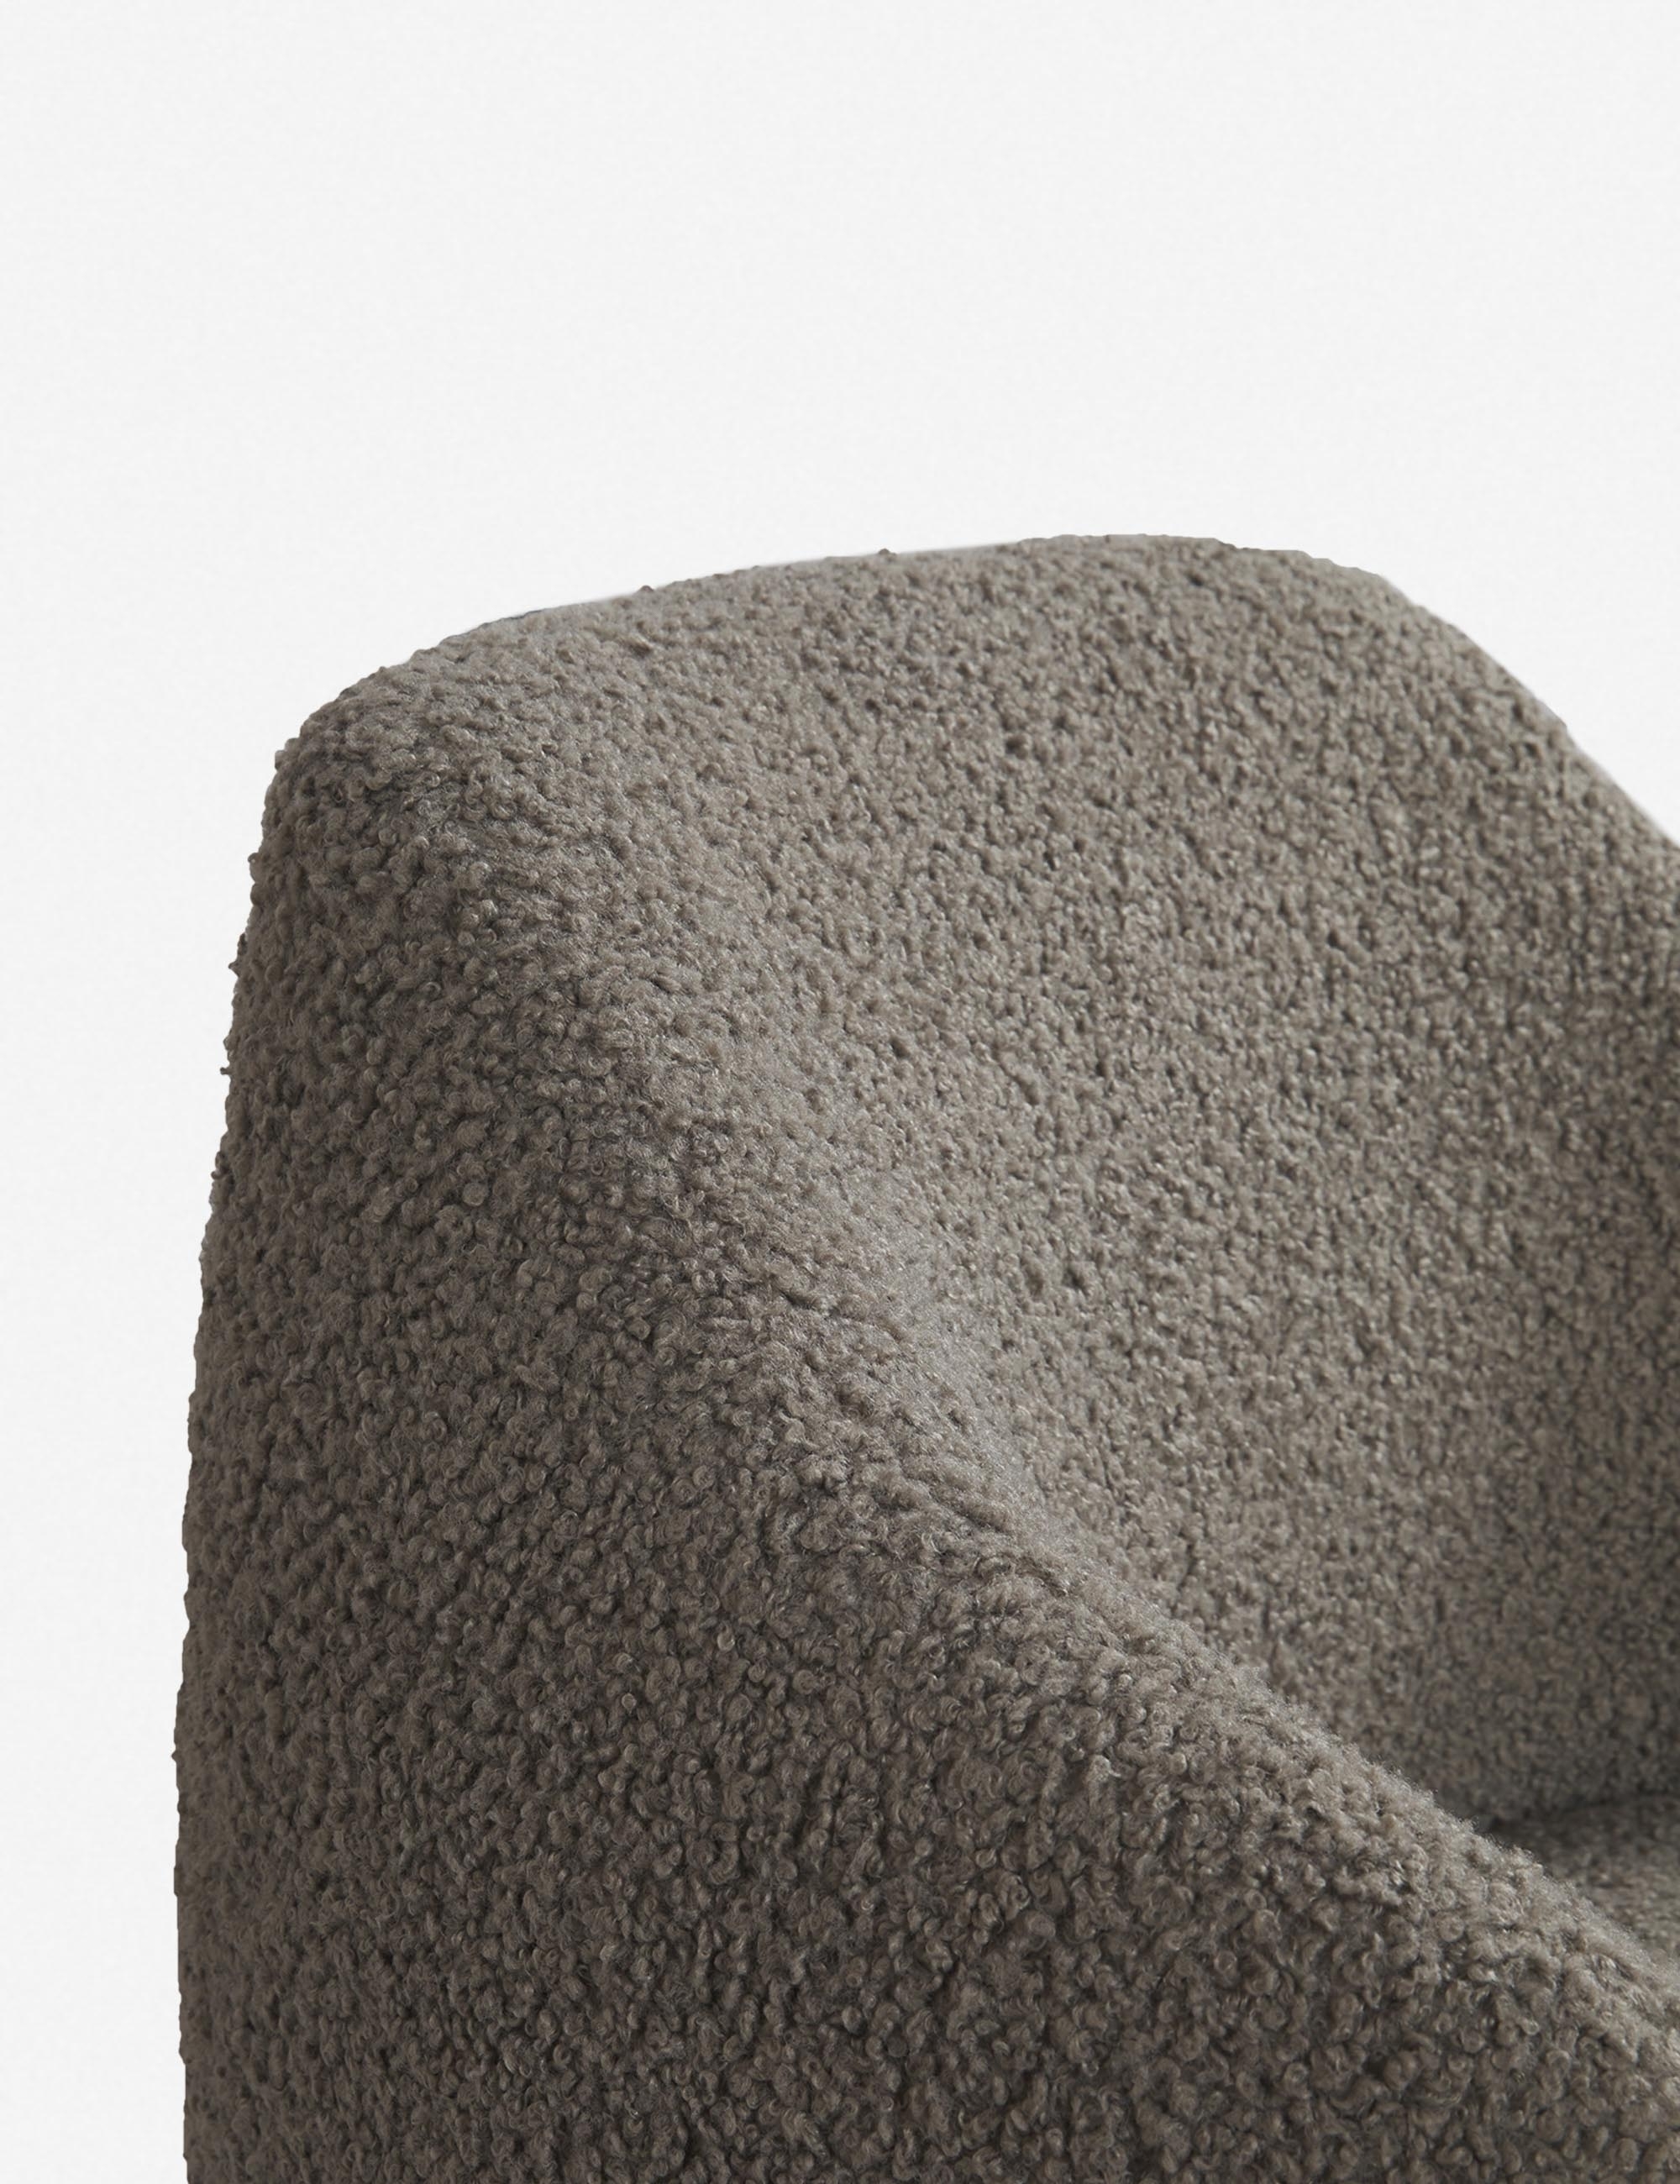 Tobi Swivel Chair, Gray - Image 7